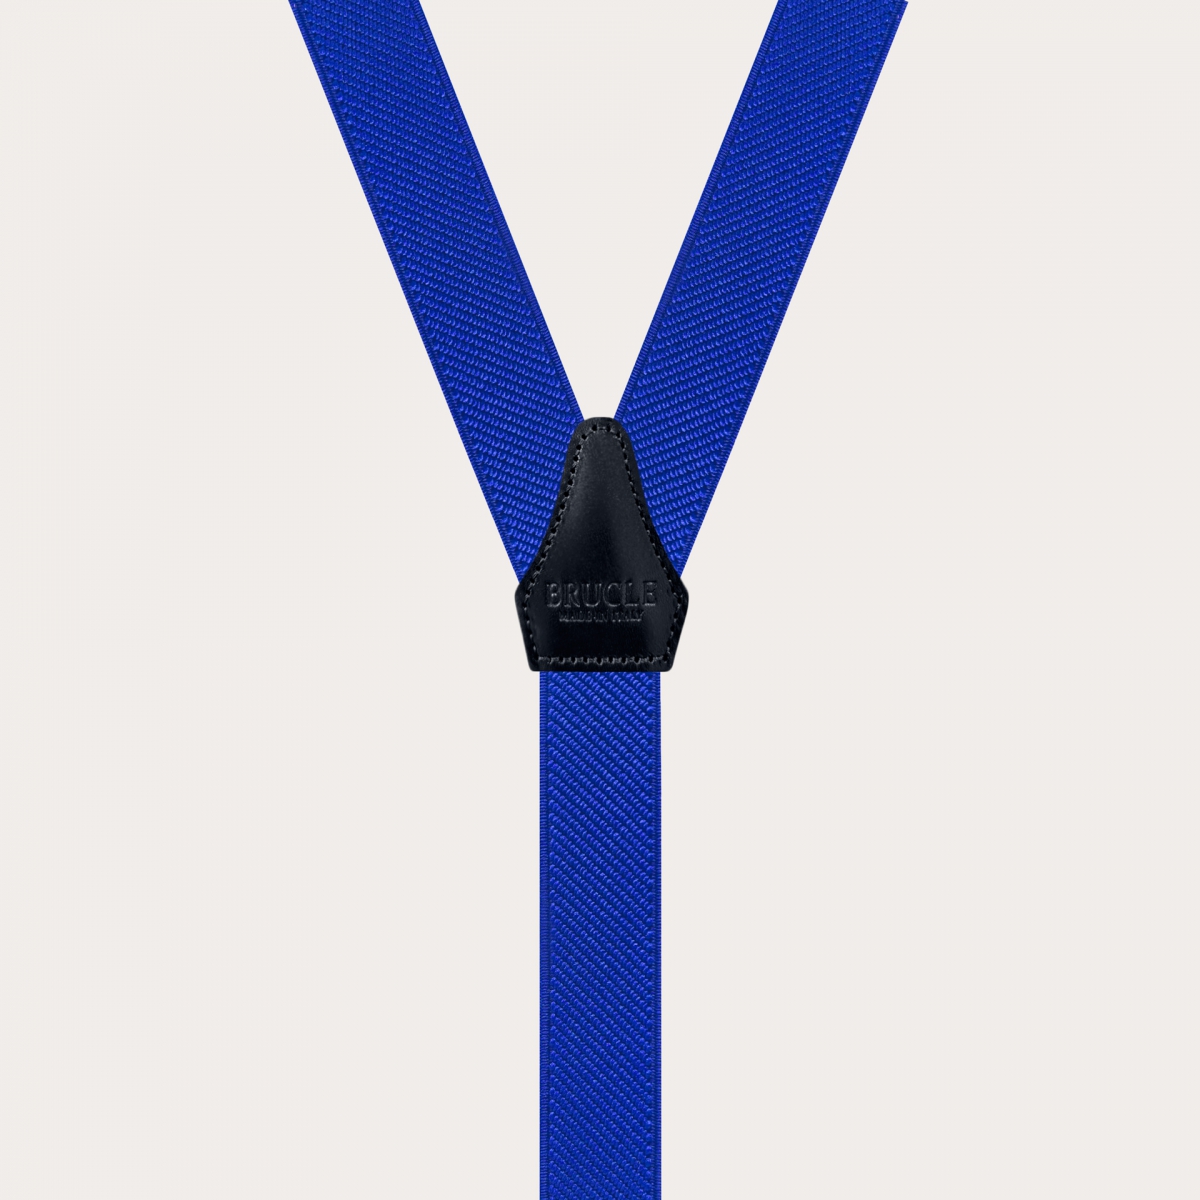 BRUCLE Unisex double-use suspenders, royal blue